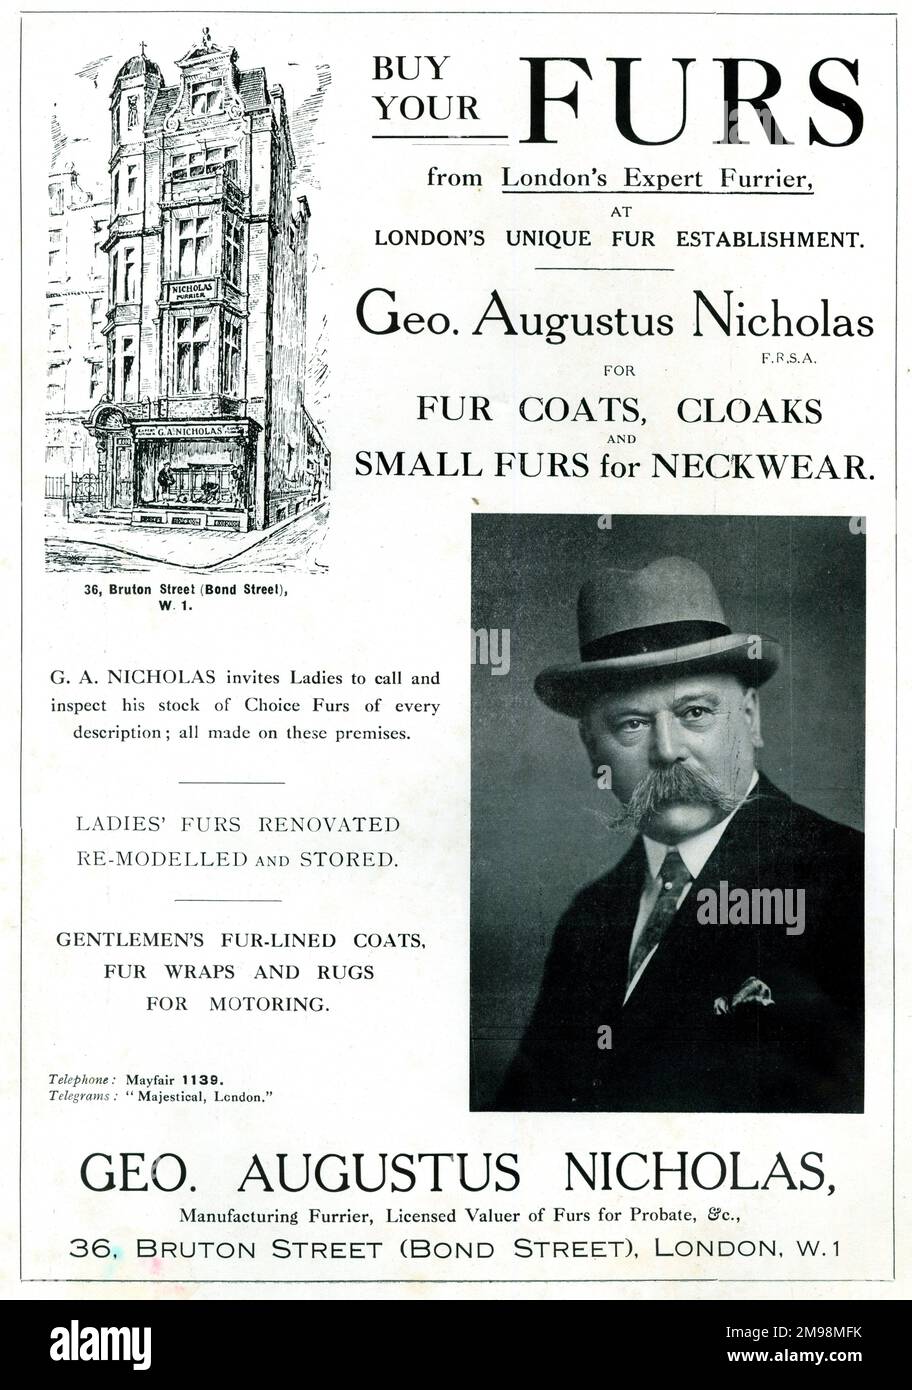 Pubblicità, George Augustus Nicholas, 36 Bruton Street, Londra W1, esperto di Londra Furrier. Foto Stock